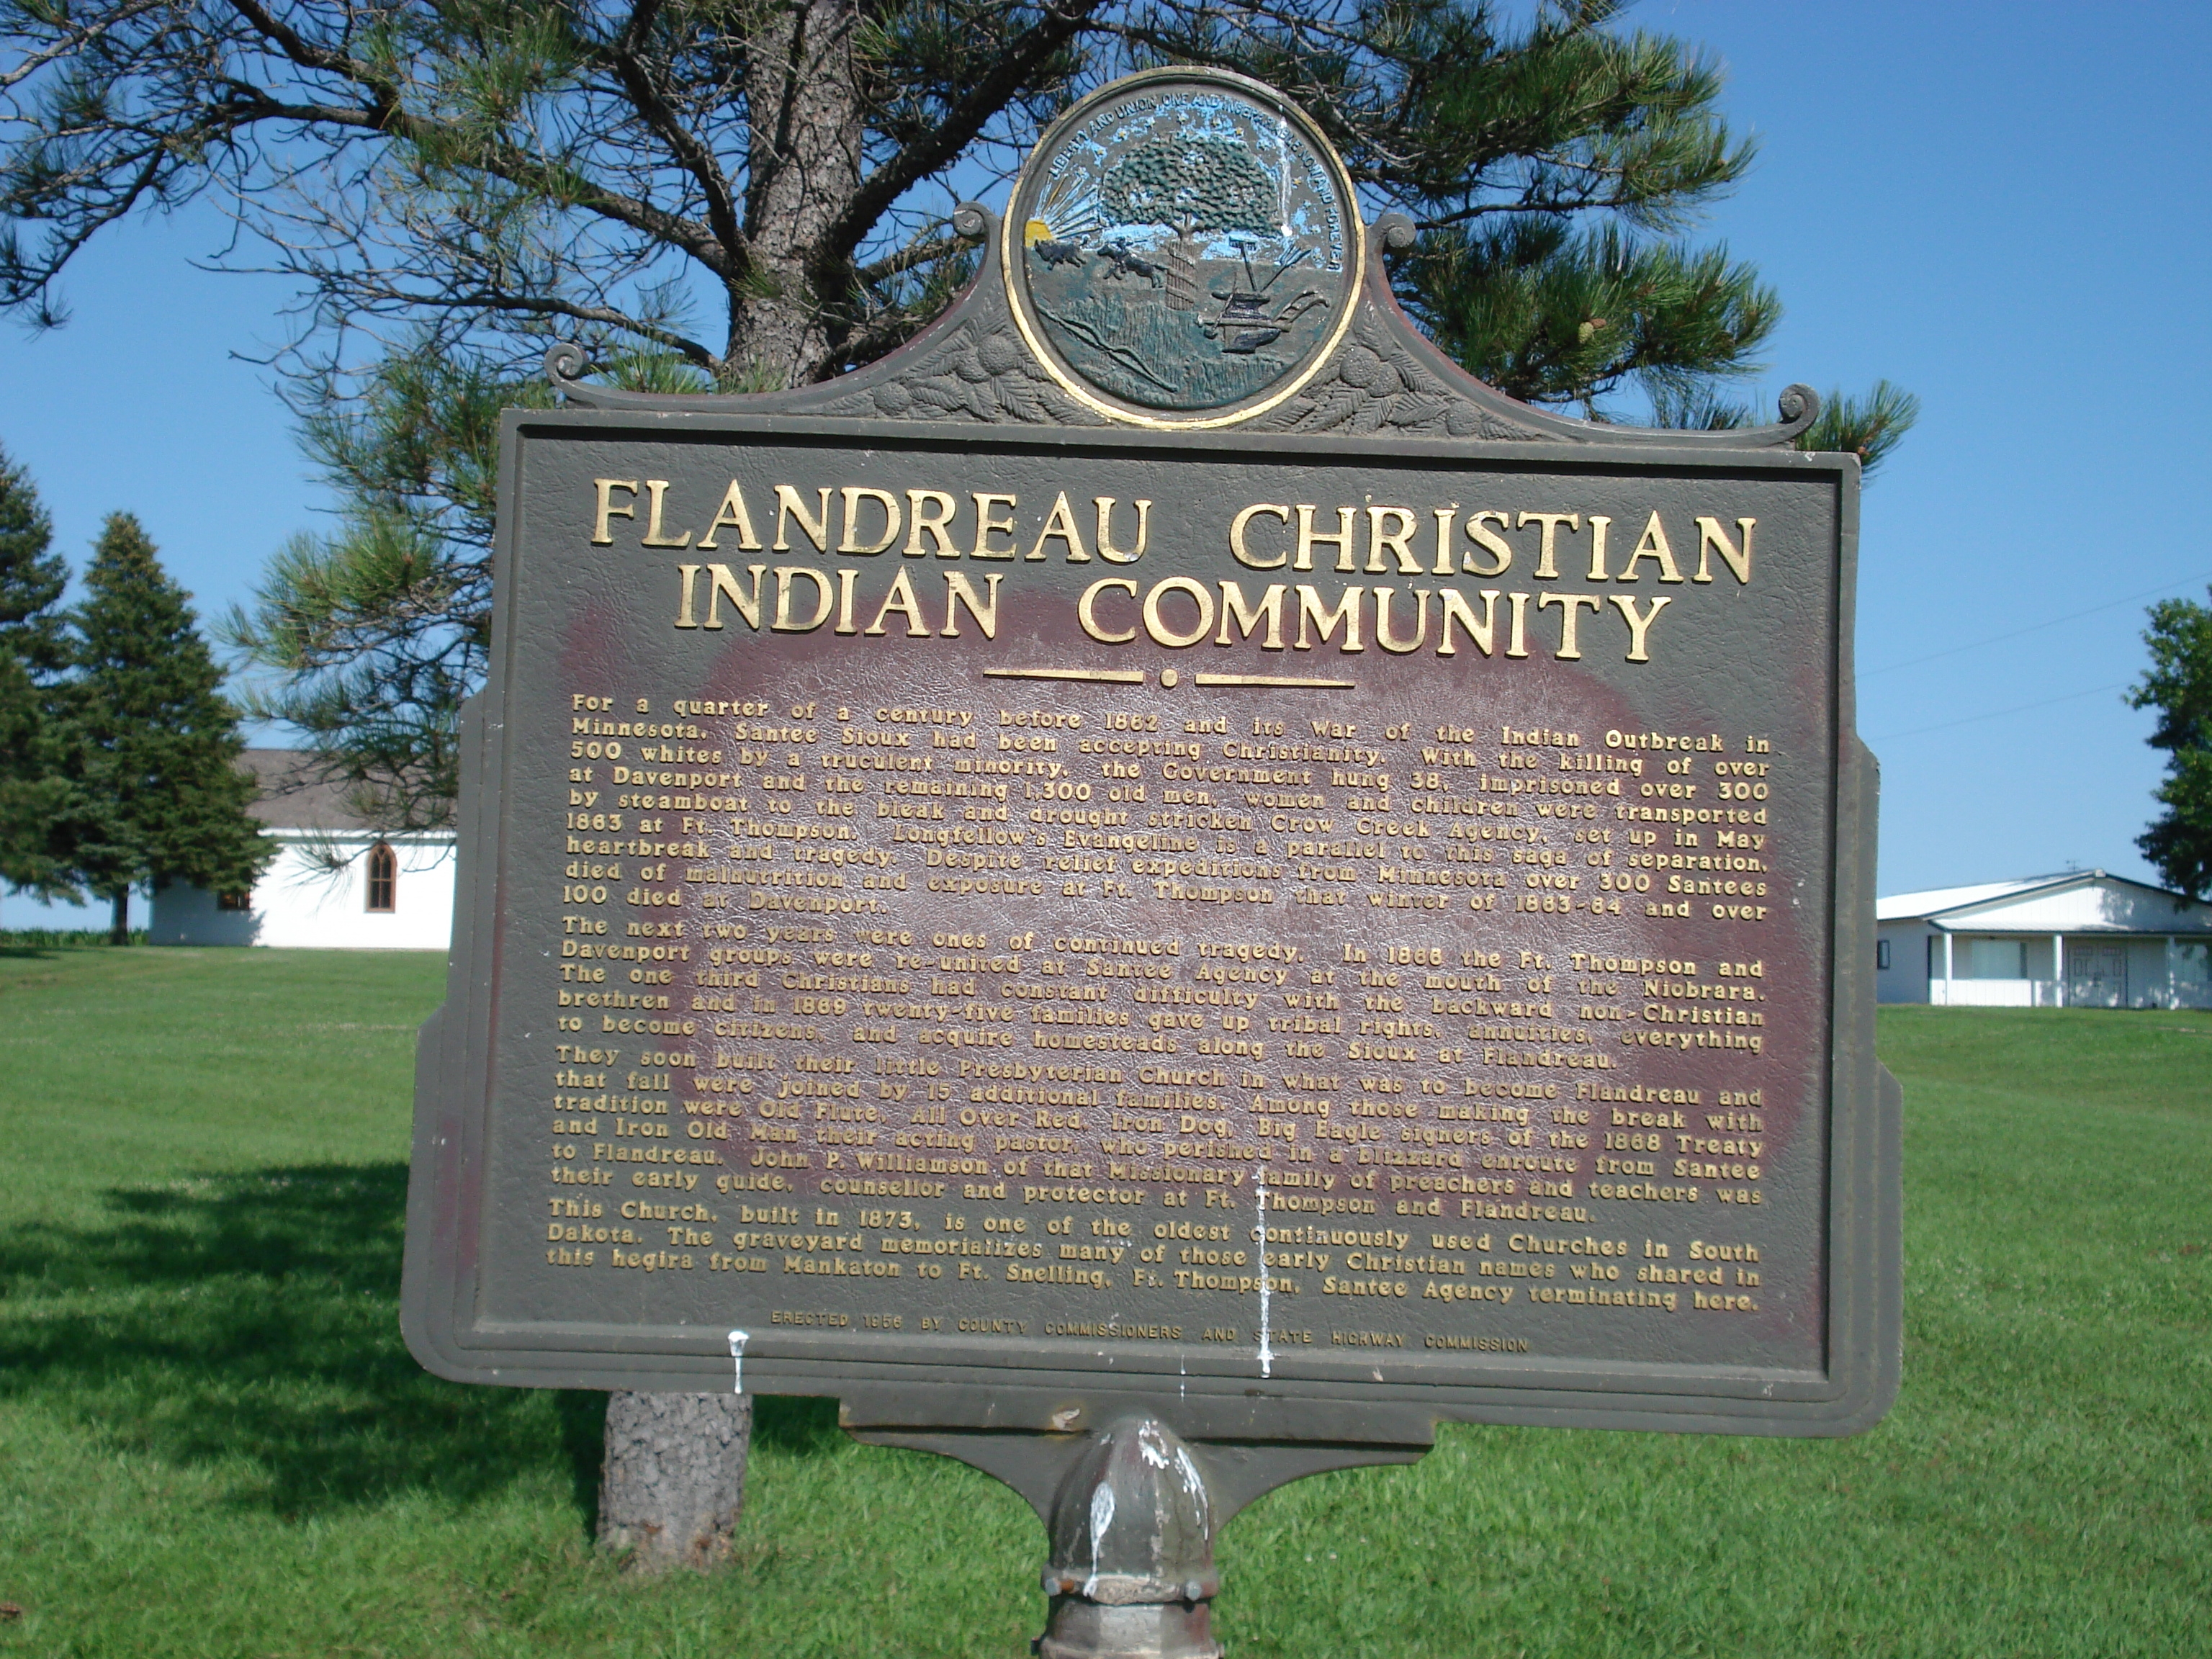 Flandreau Christian Indian Community Marker